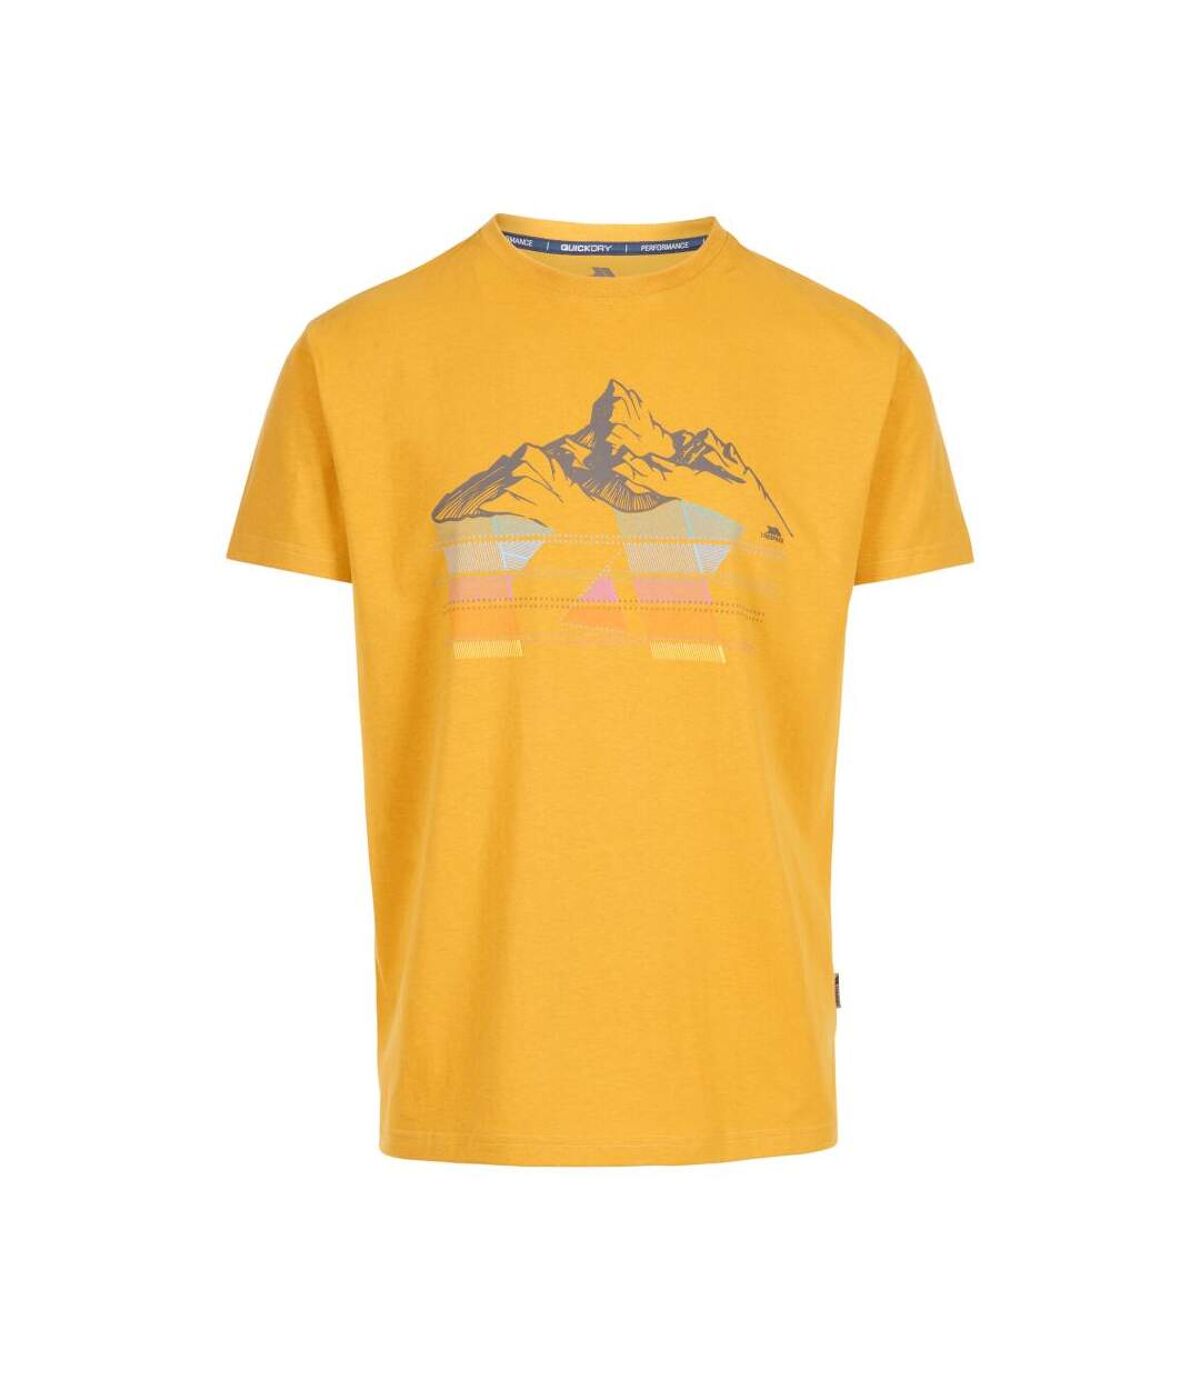 Trespass - T-shirt DAYTONA - Homme (Jaune vif) - UTTP5472